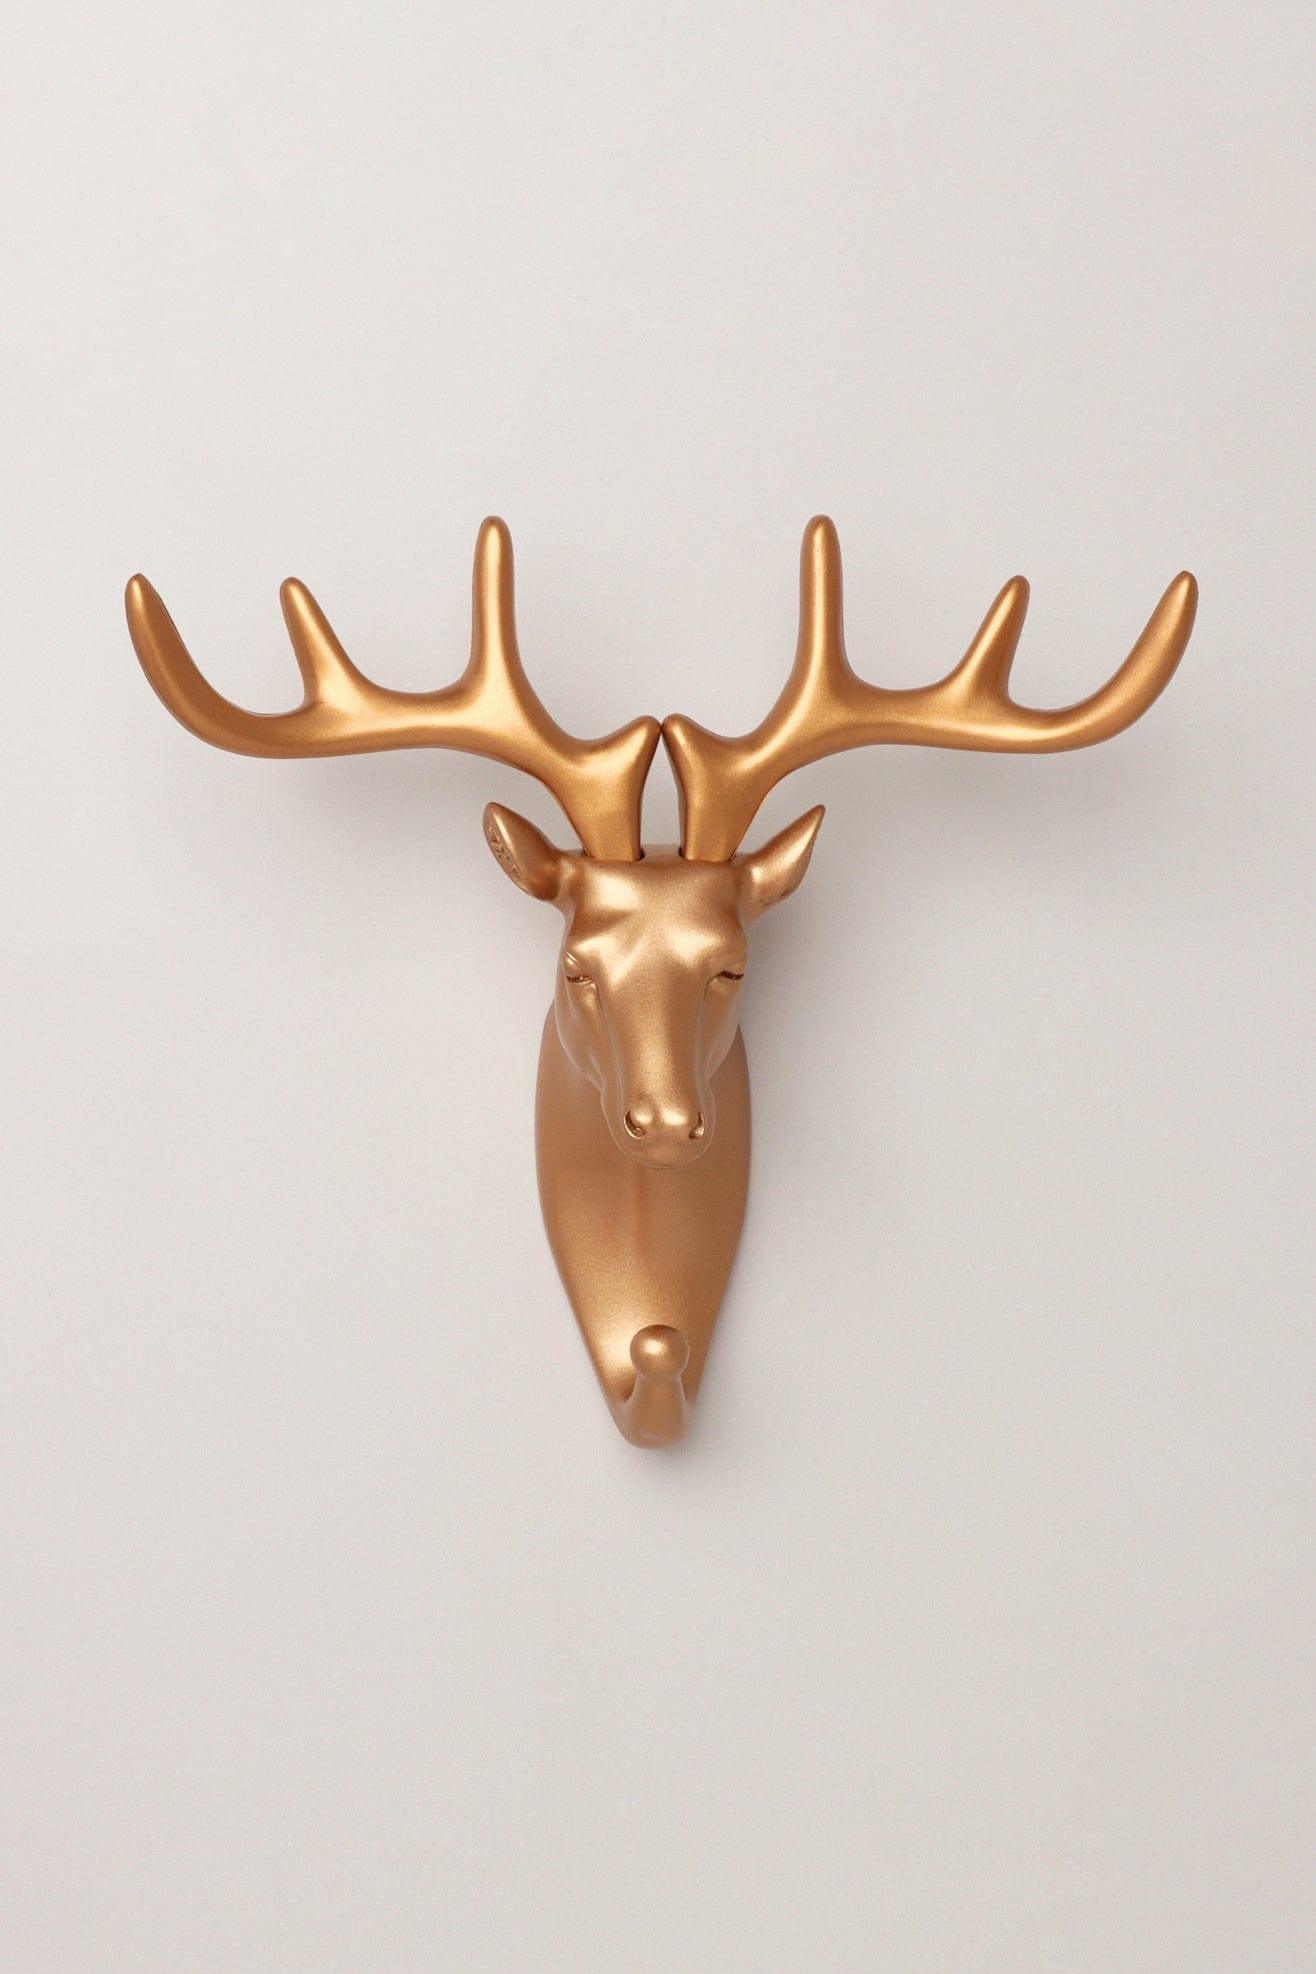 G Decor All Hooks Deer Ornamental Animal Heads Wildlife Bronze Gold Solid Resin Wall Organizer Coat Hook